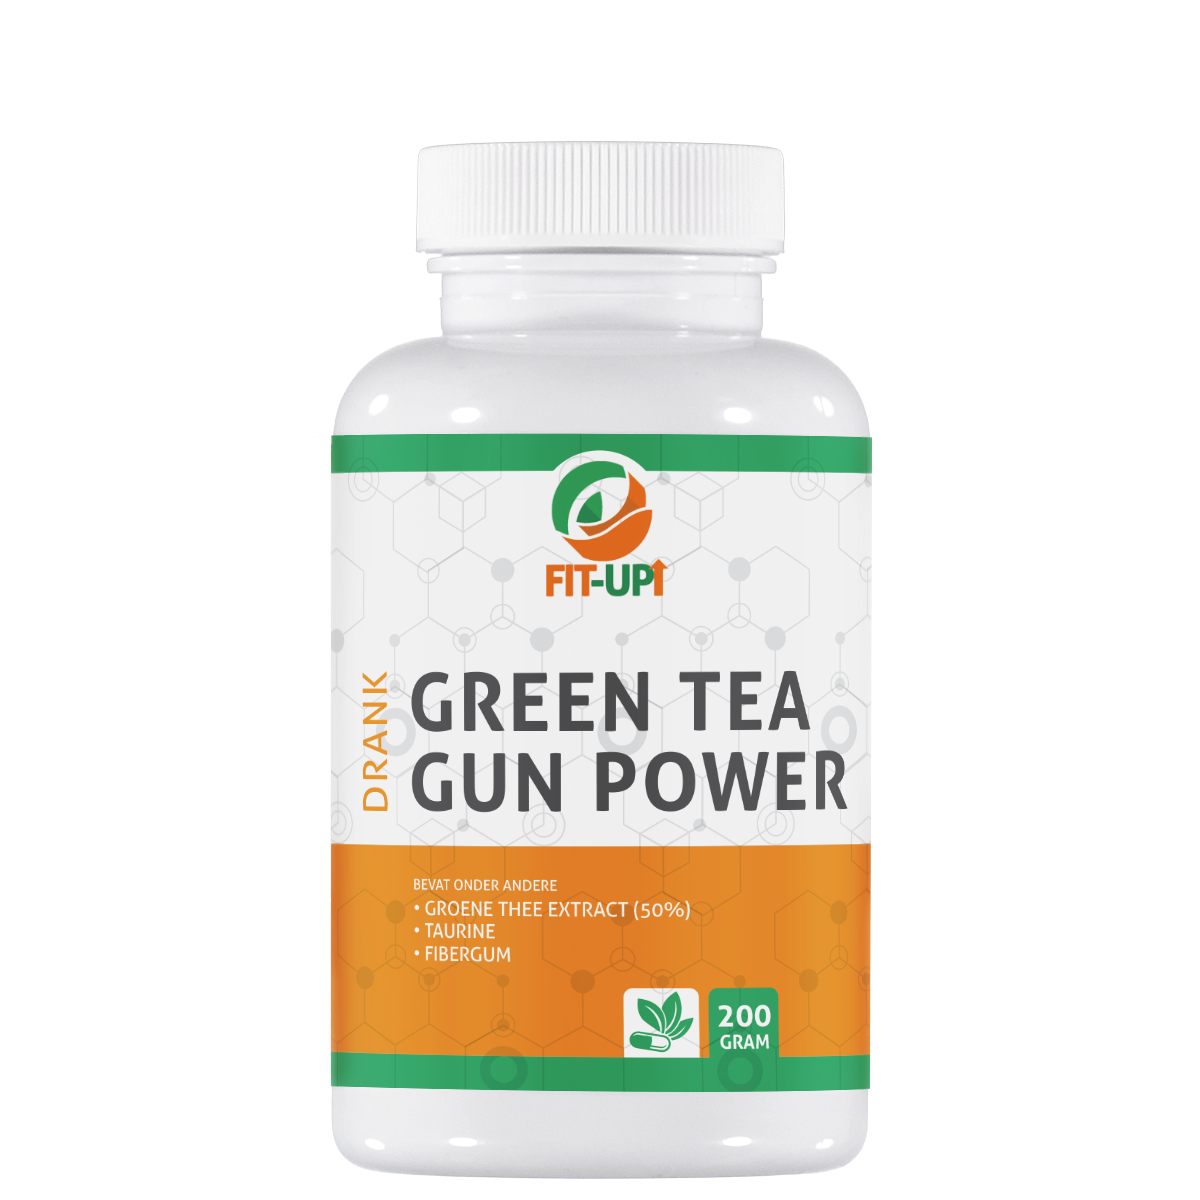 Green tea gun power - drank